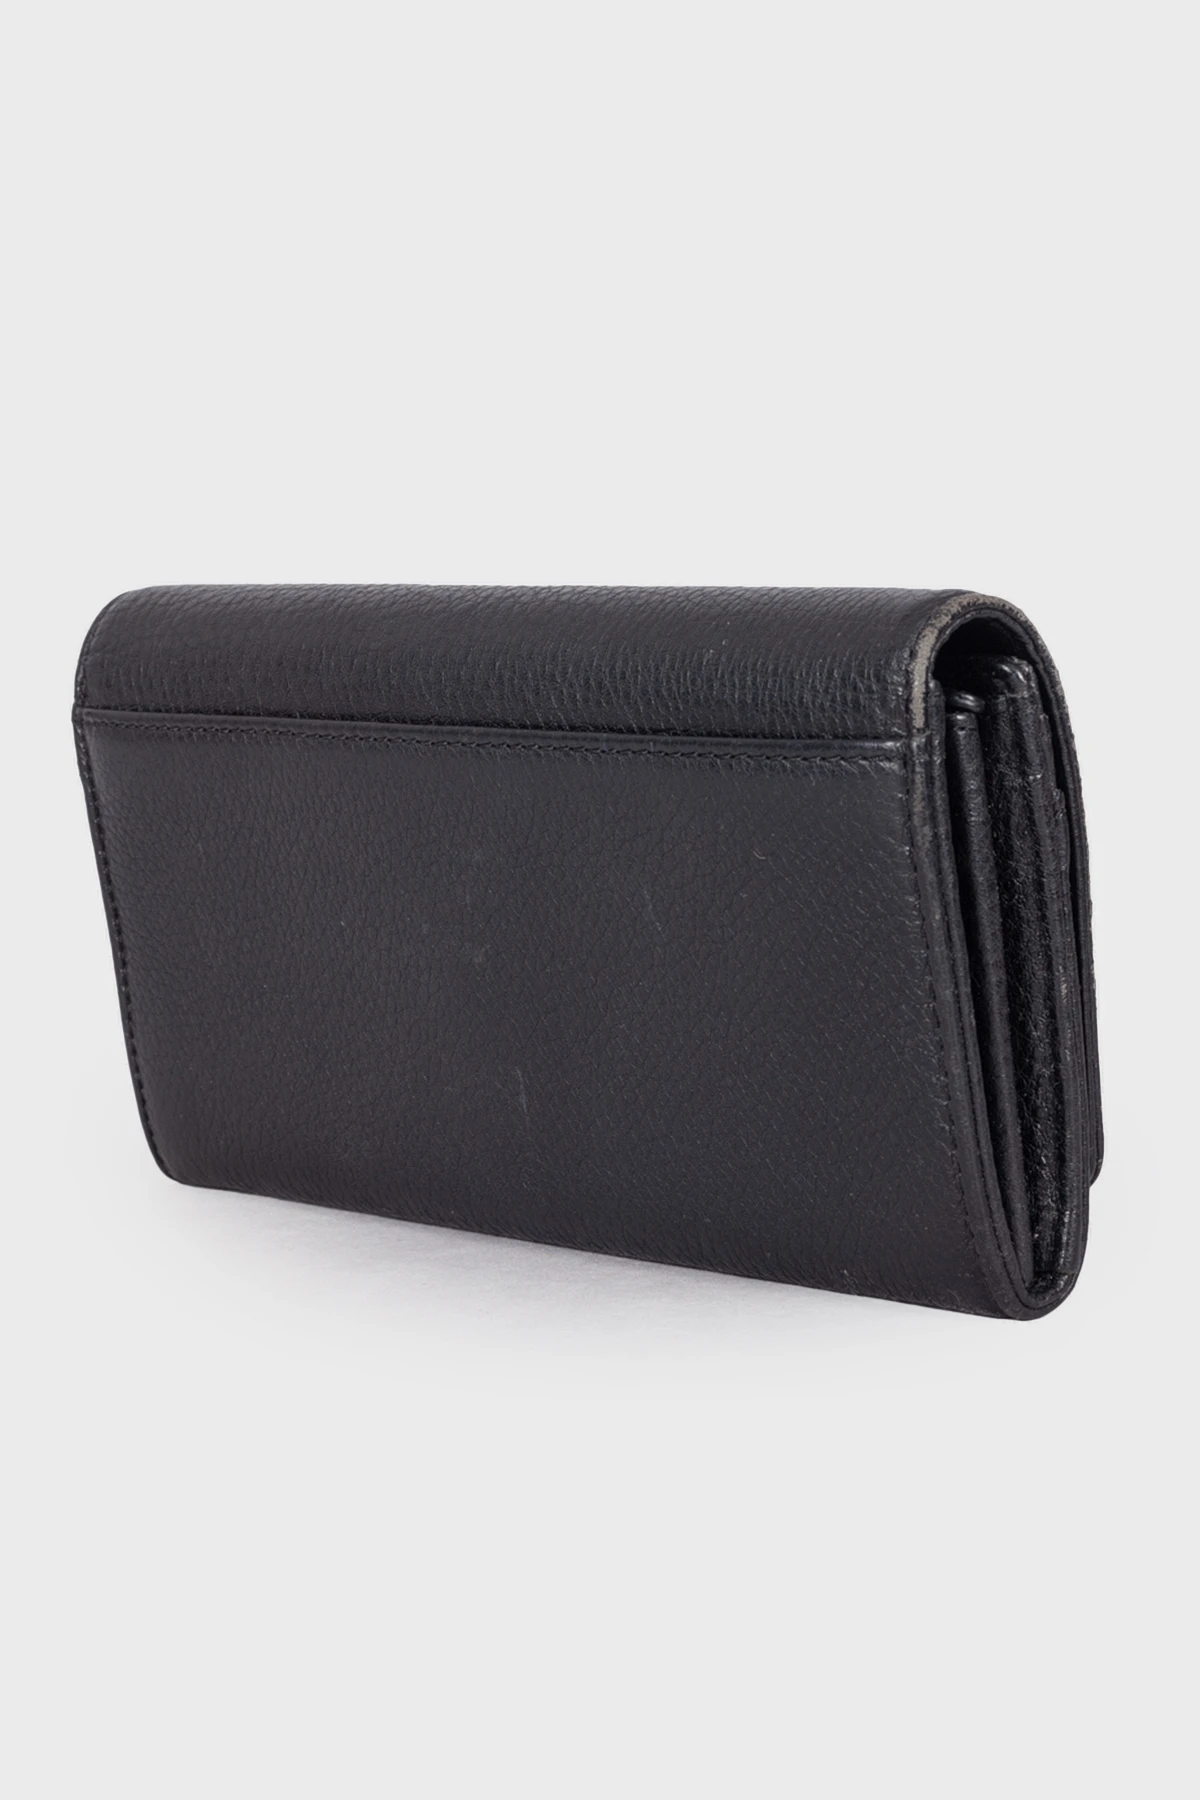 Michael Kors Black wallet with gold brand logo - ReOriginal